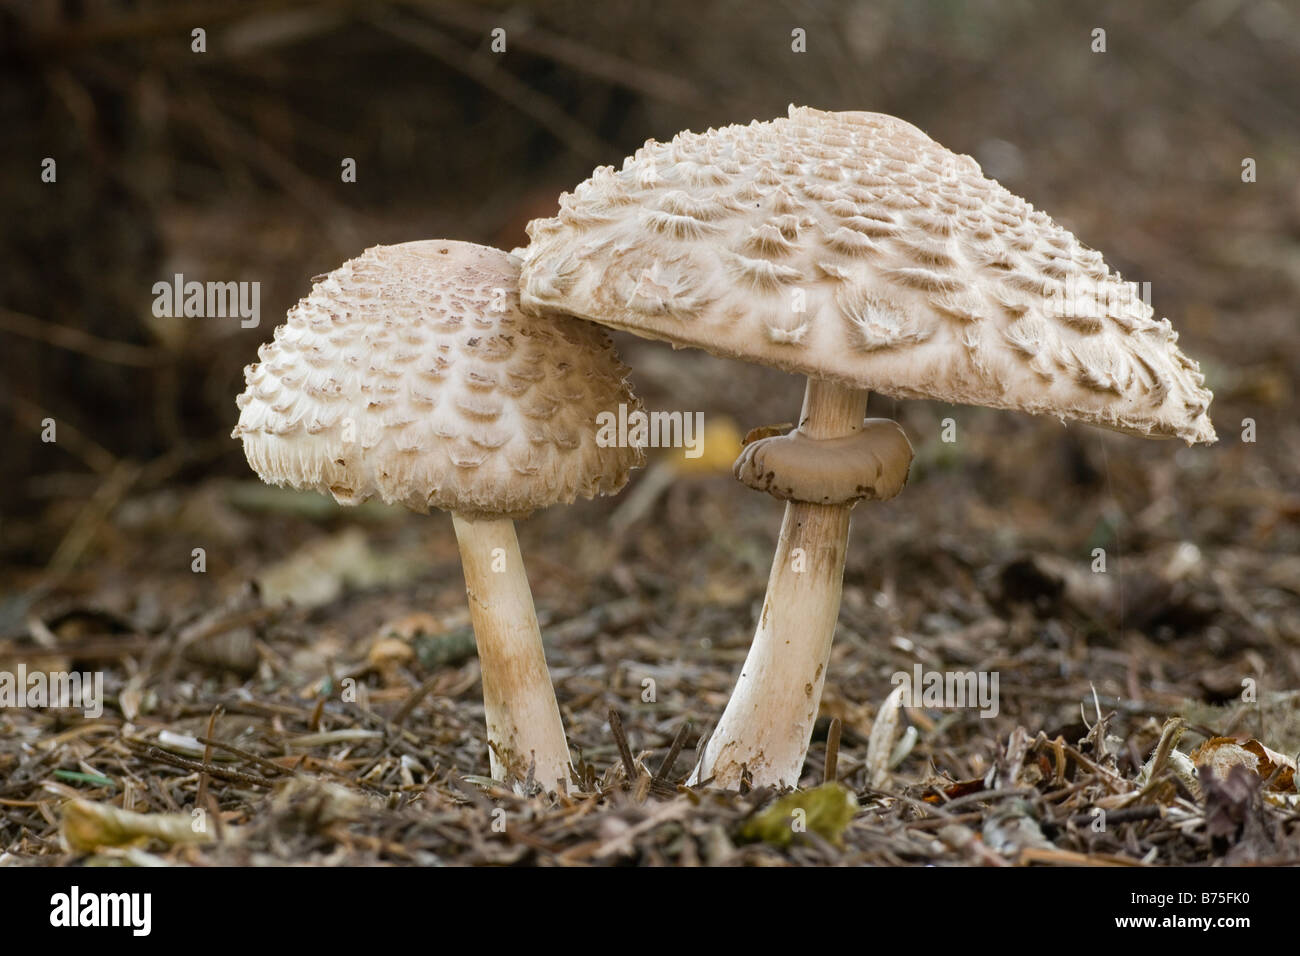 mashroom 'schirmling' - parasol mushroom Stock Photo